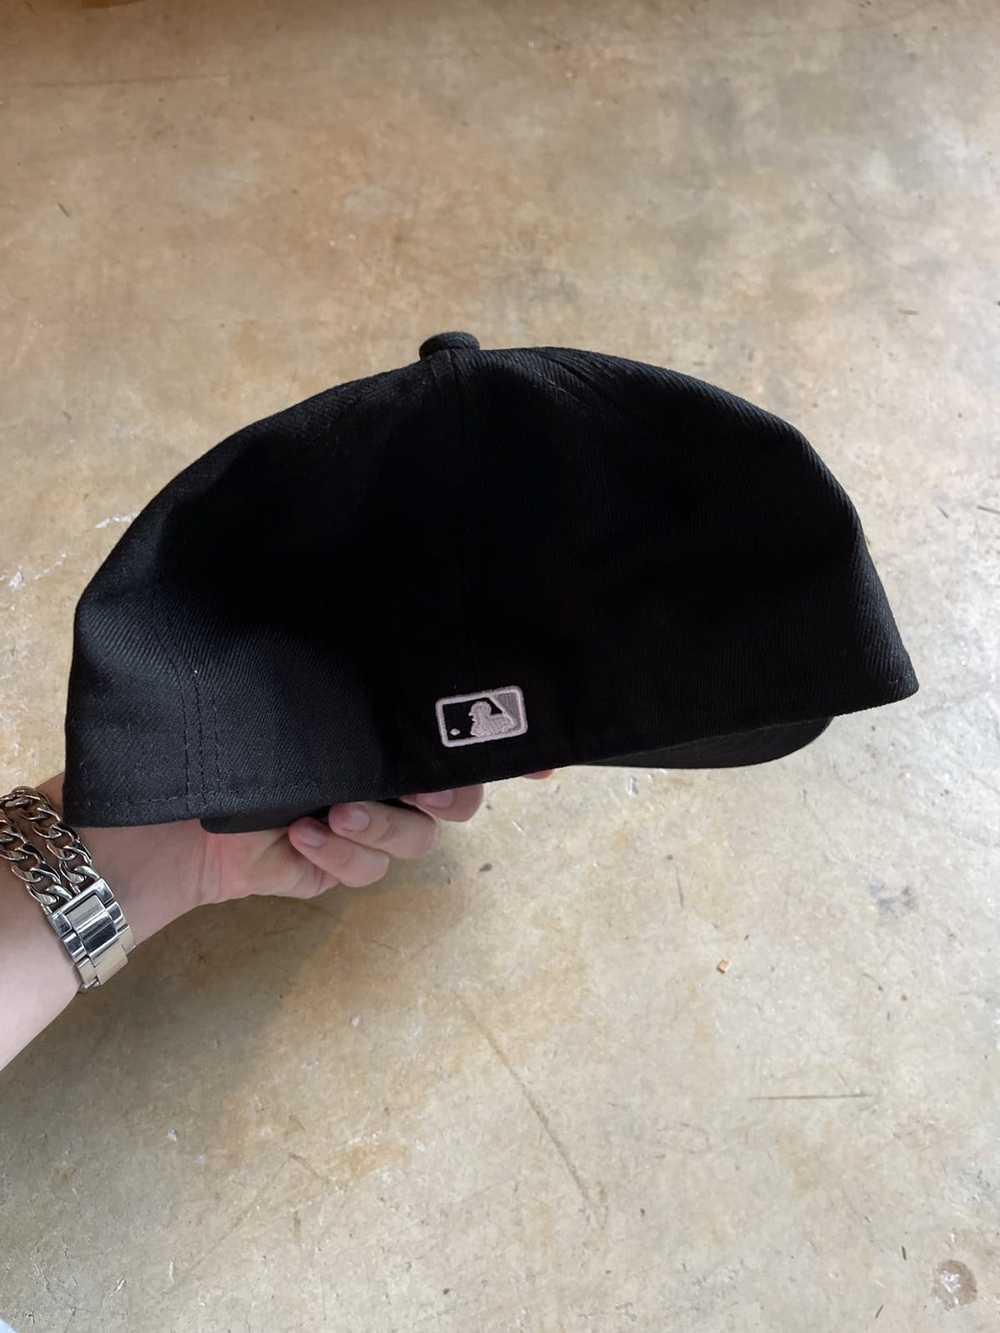 New Era Black New Era Fitted Hat - image 3